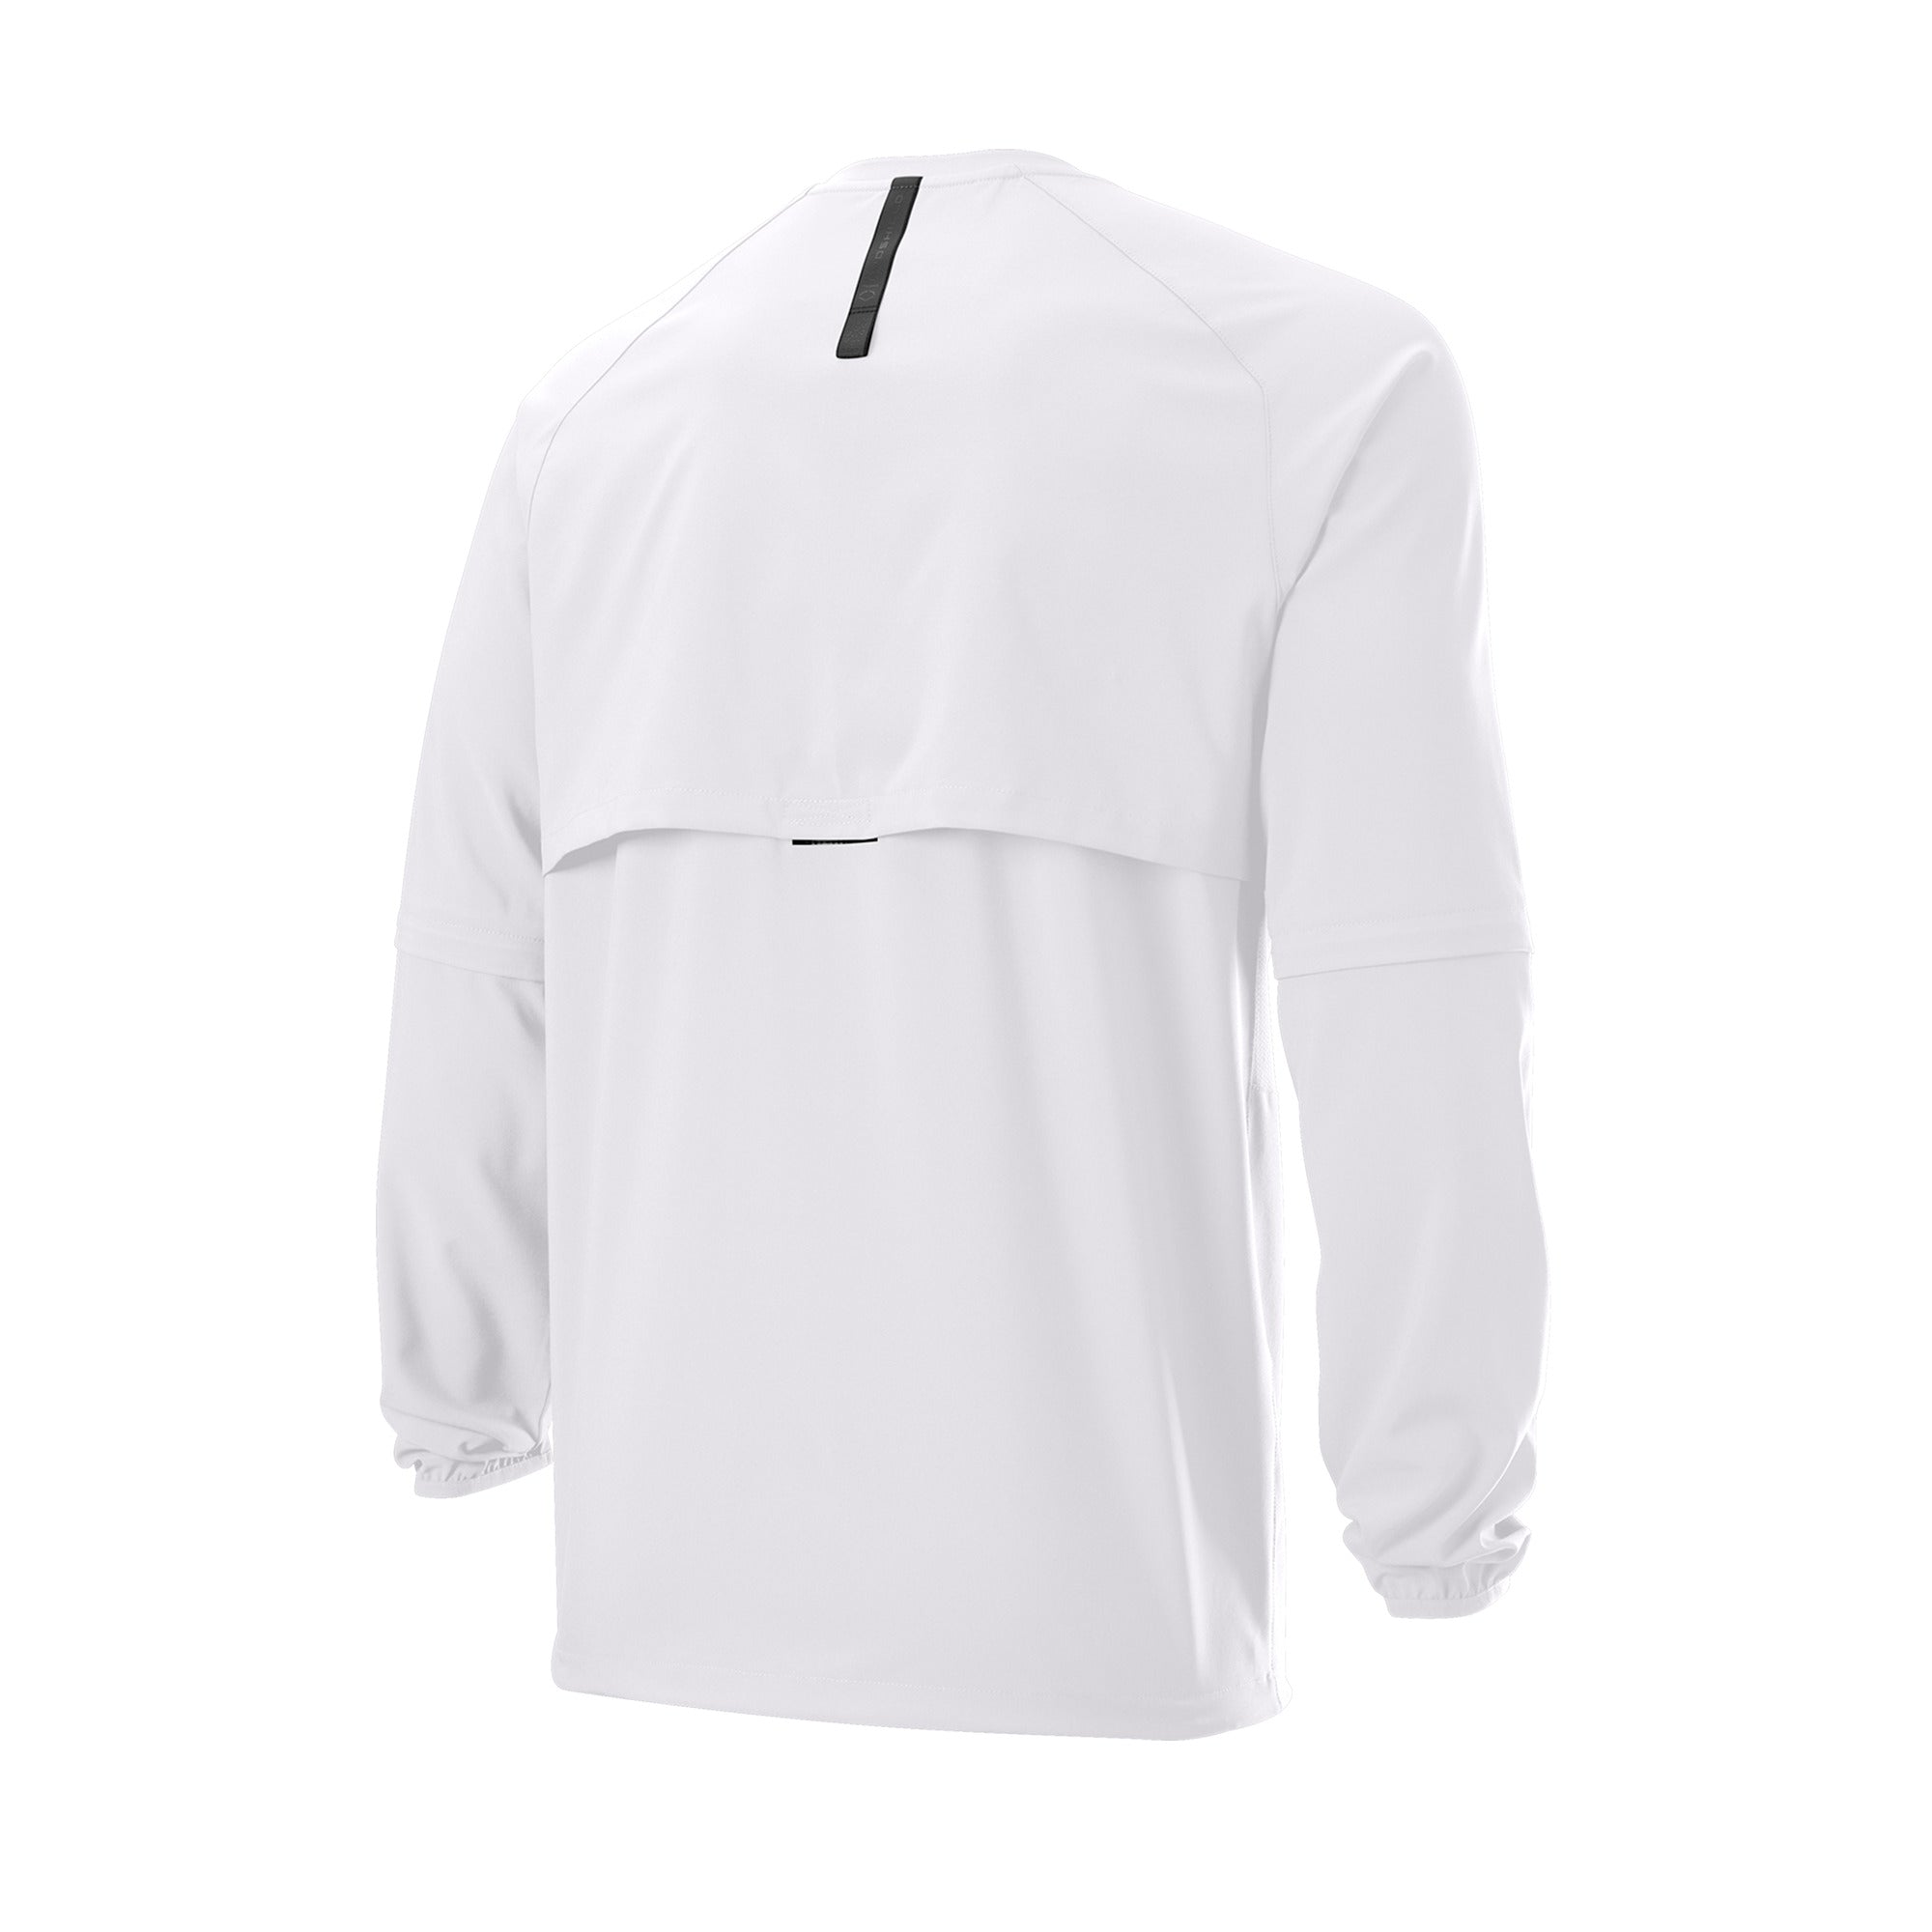 Evoshield Adult Long Sleeve BP Jacket Team White